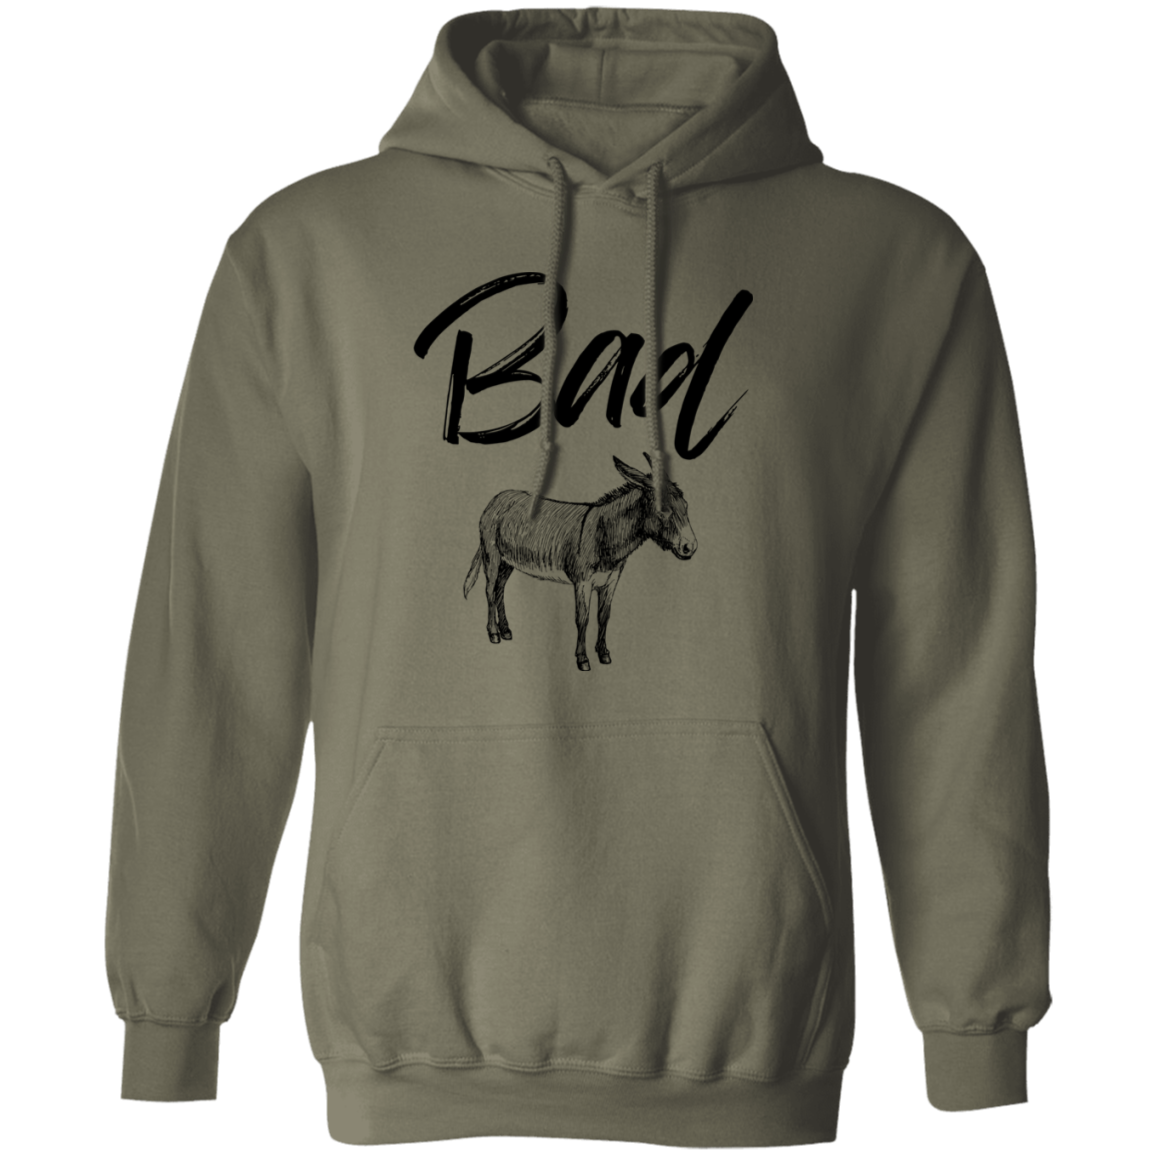 Badass Bad A$$ Hoodie, Funny Shirts